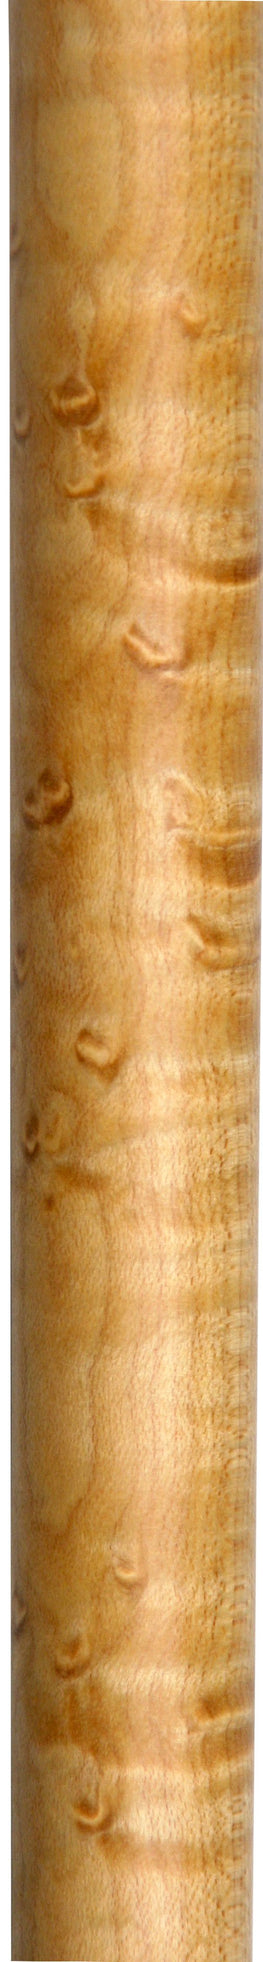 an American Woodcrafter Birdseye Maple Derby Walking Cane With Maple Wood Shaft